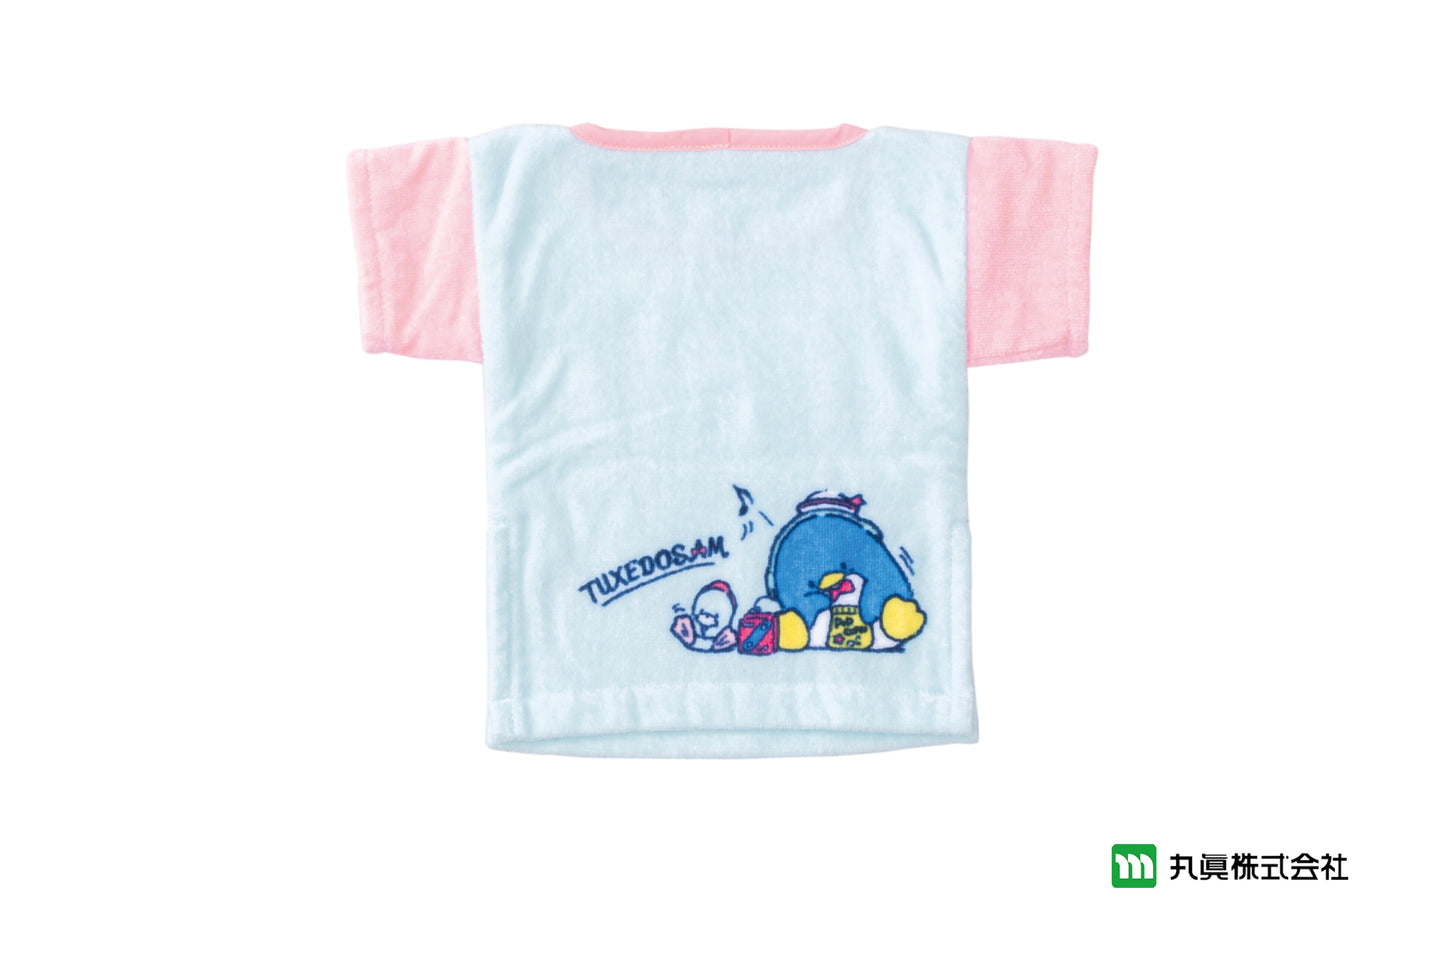 Sanrio® Tuxedosam T Shirt Towel